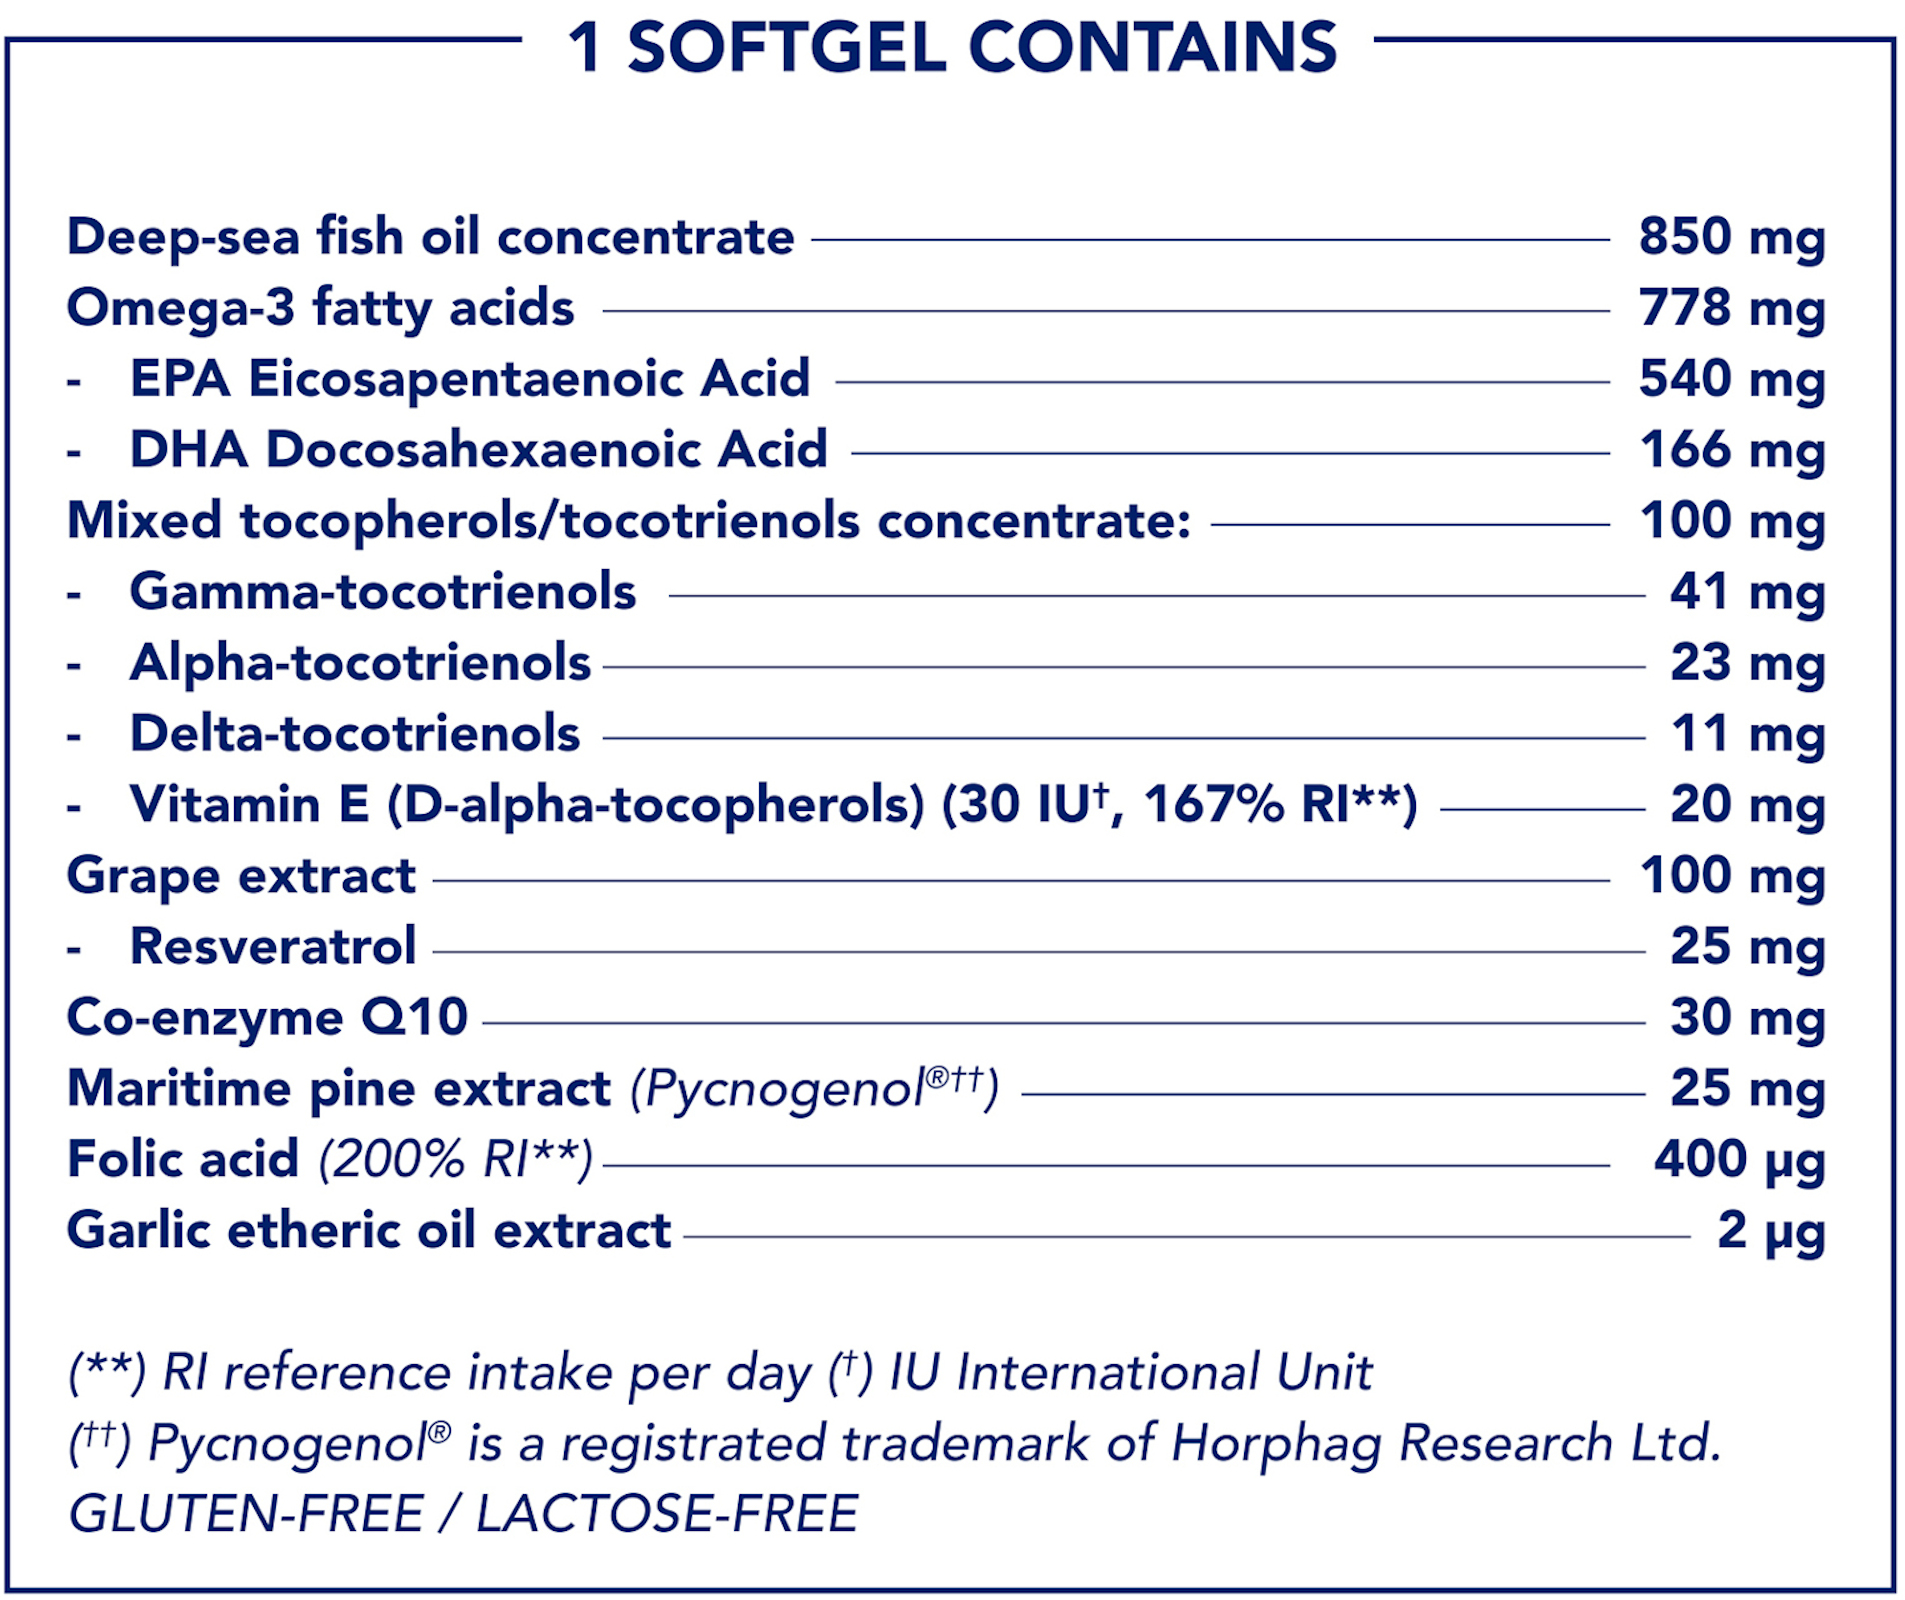 1 SOFTGEL CONTAINS Deep-sea fish oil concentrate 850 mg, Omega-3 fatty acids 778 mg, EPA Eicosapentaenoic Acid 540 mg, DHA Docosahexaenoic Acid 166 mg, Mixed tocopherols/tocotrienols concentrate: 100mg, Vitamin E D-alpha-tocopherols 30 IUt, 167% RI 20mg, Grape extract 100mg, Resveratrol 25mg, 
                          Gamma-tocotrienols 41mg, Alpha-tocotrienols 23mg, Delta-tocotrienols 11mg, Co-enzyme Q10 30mg, Maritime pine extract (Pycnogenol@tt) 100mg, Folic acid (200% RI**)400 μg Garlic etheric oil extract 2 μg. Rl reference intake per day (†) IU International Unit (tt) Pycnogenol® is a registrated trademark of Horphag Research Ltd. 
                          GLUTEN-FREE / LACTOSE-FREE